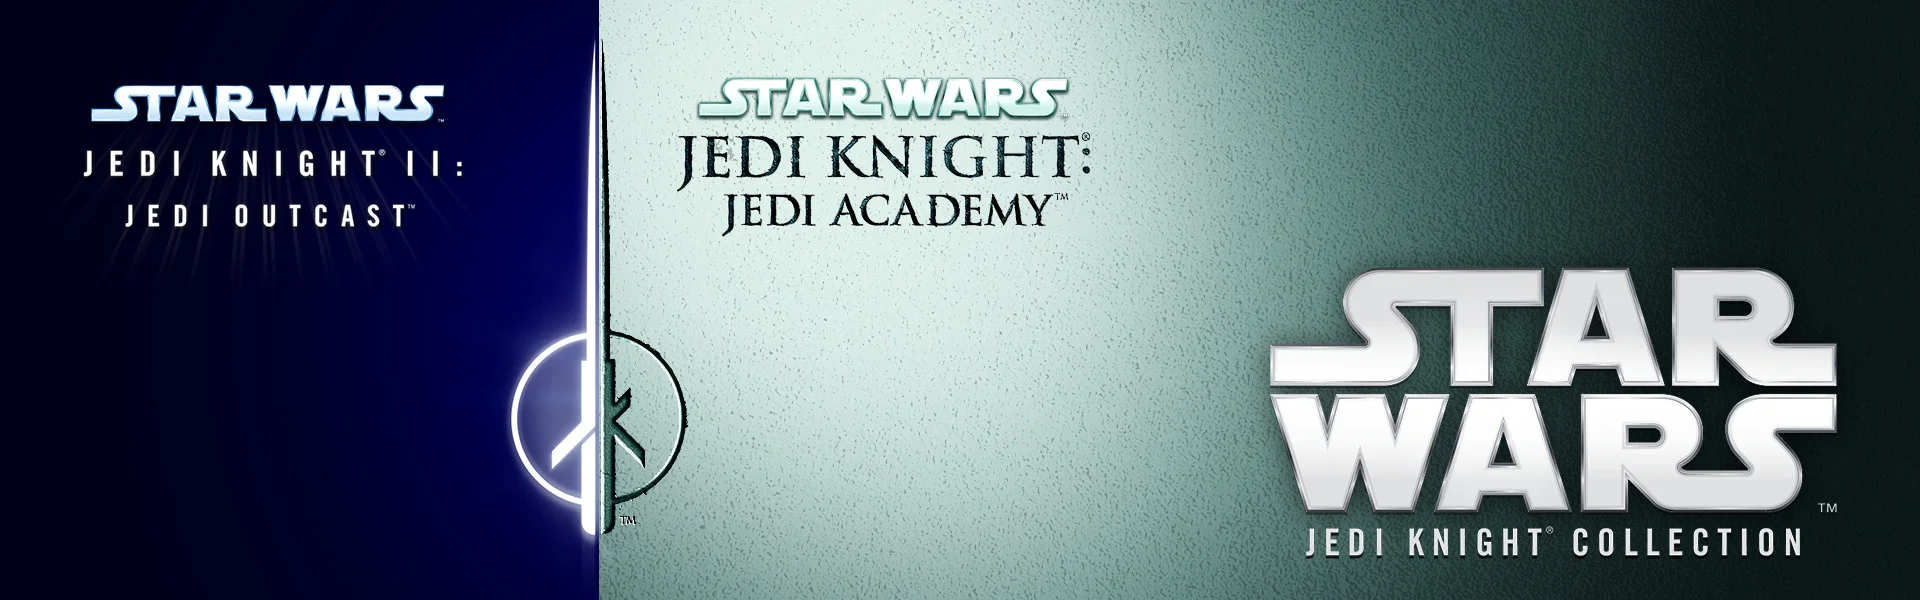 Коллекции Star Wars Jedi Knight и Star Wars Racer and Commando выпустят на PS4 и Switch - фото 1